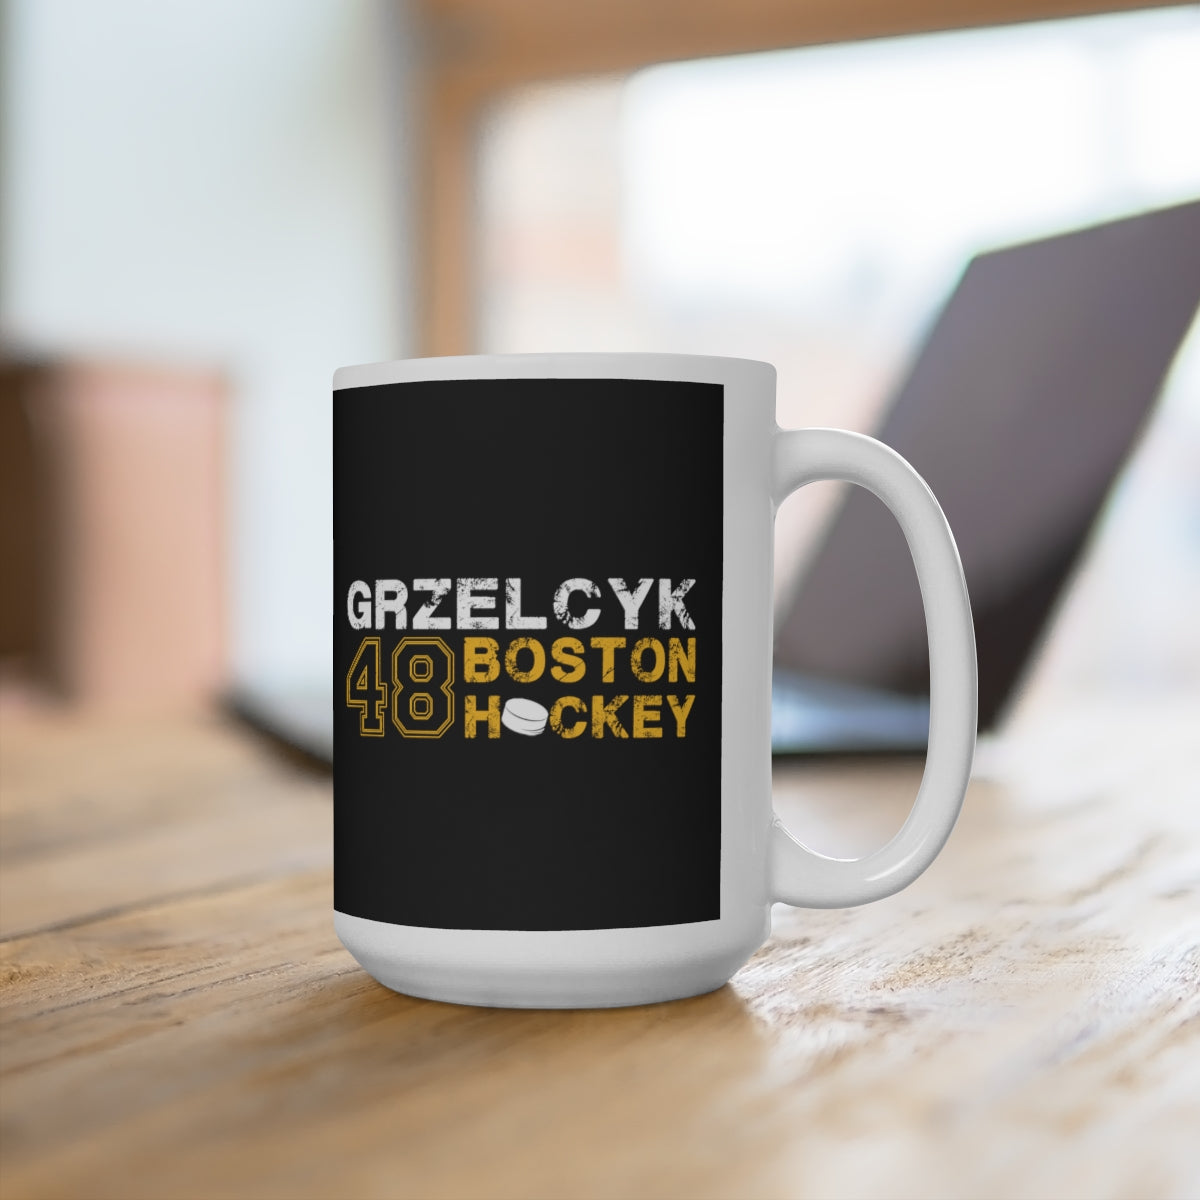 Grzelcyk 48 Boston Hockey Ceramic Coffee Mug In Black, 15oz